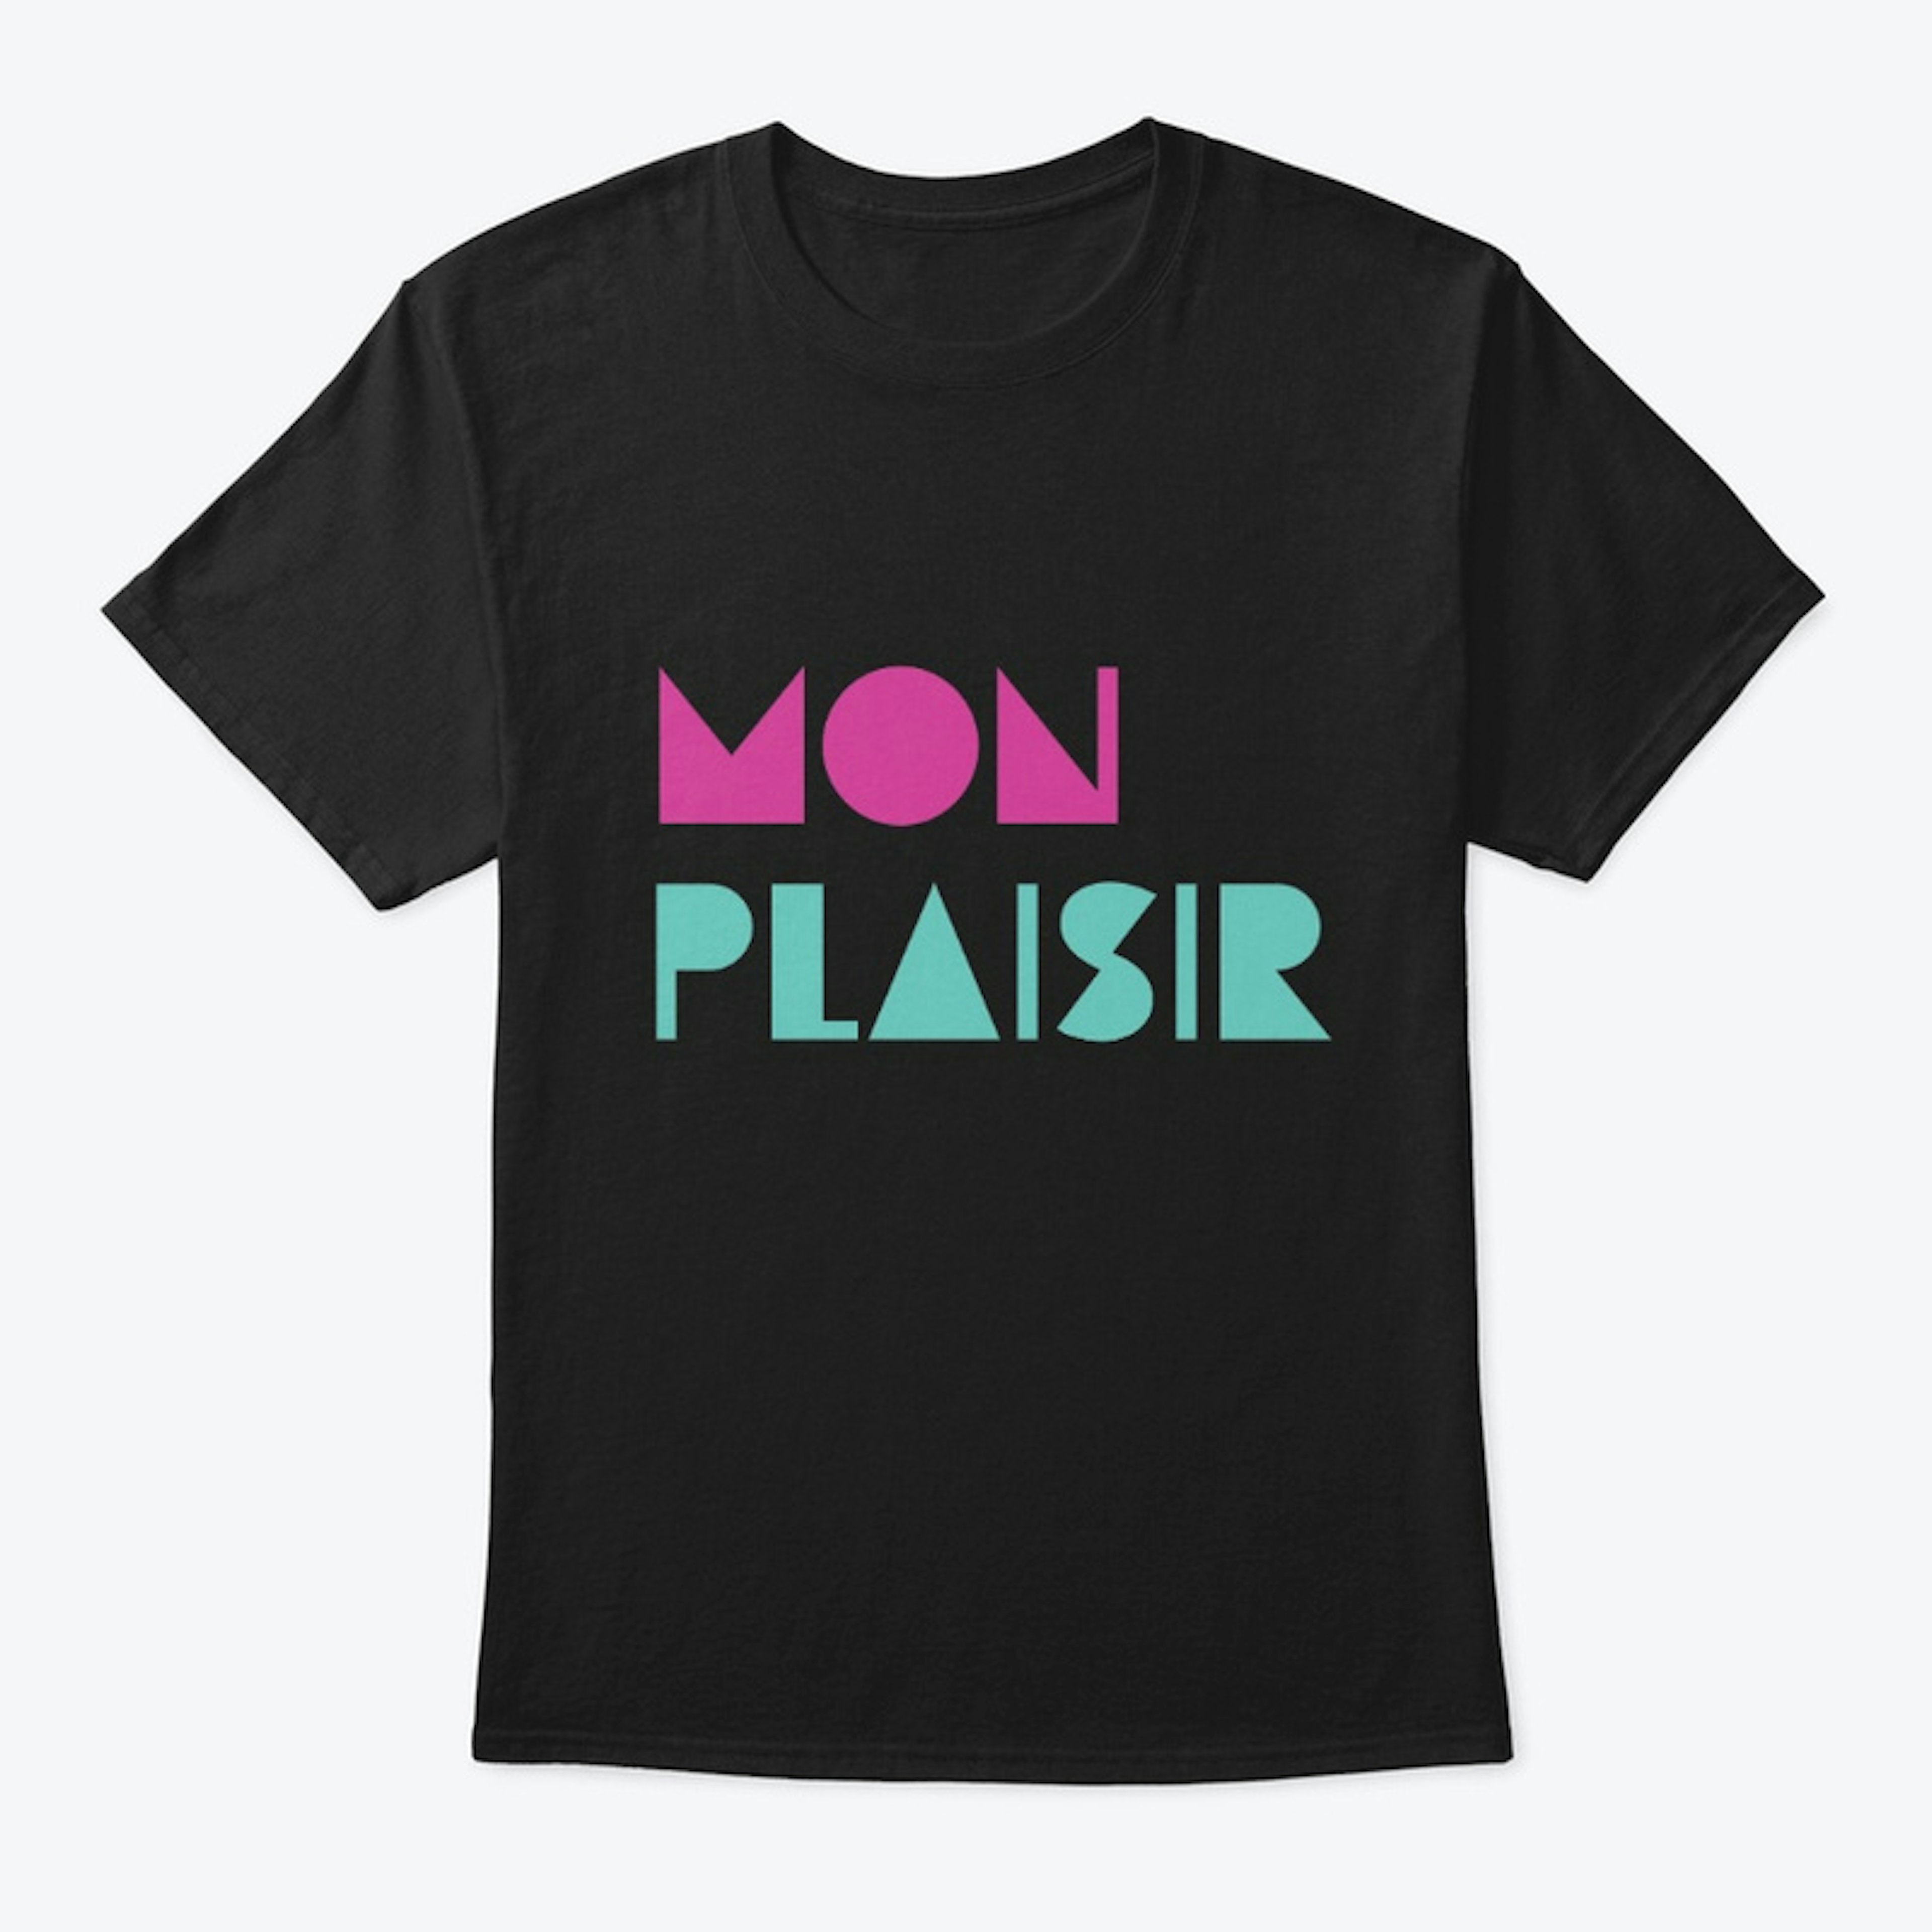 Mon Plaisir (My Pleasure)